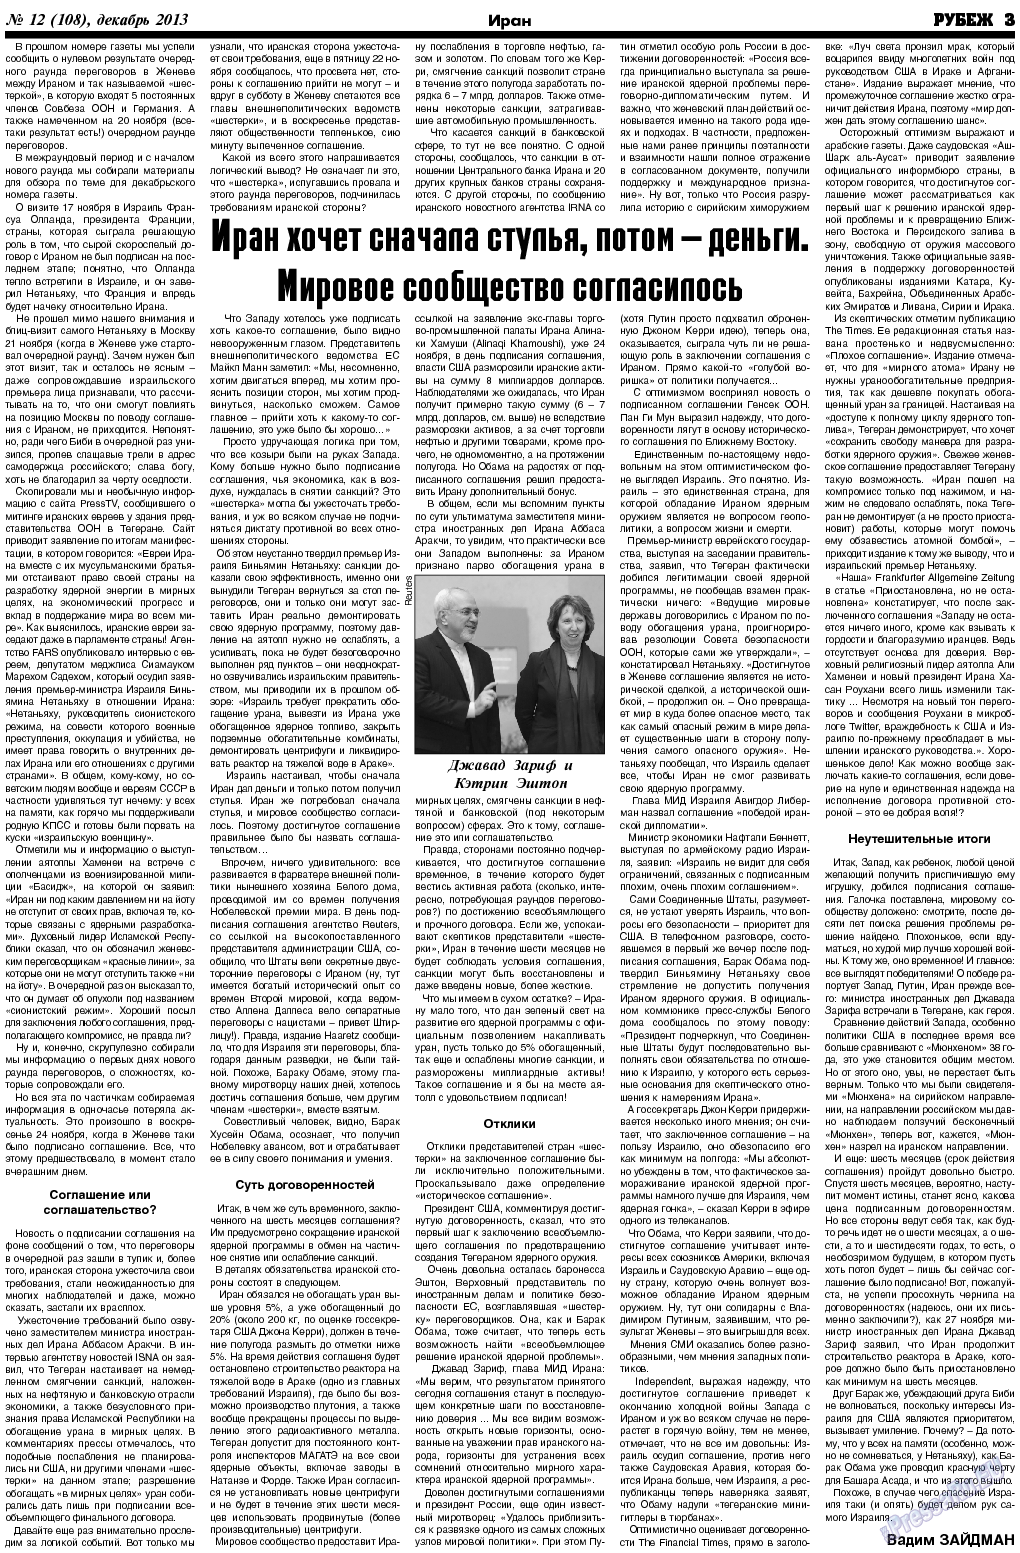 Рубеж, газета. 2013 №12 стр.3